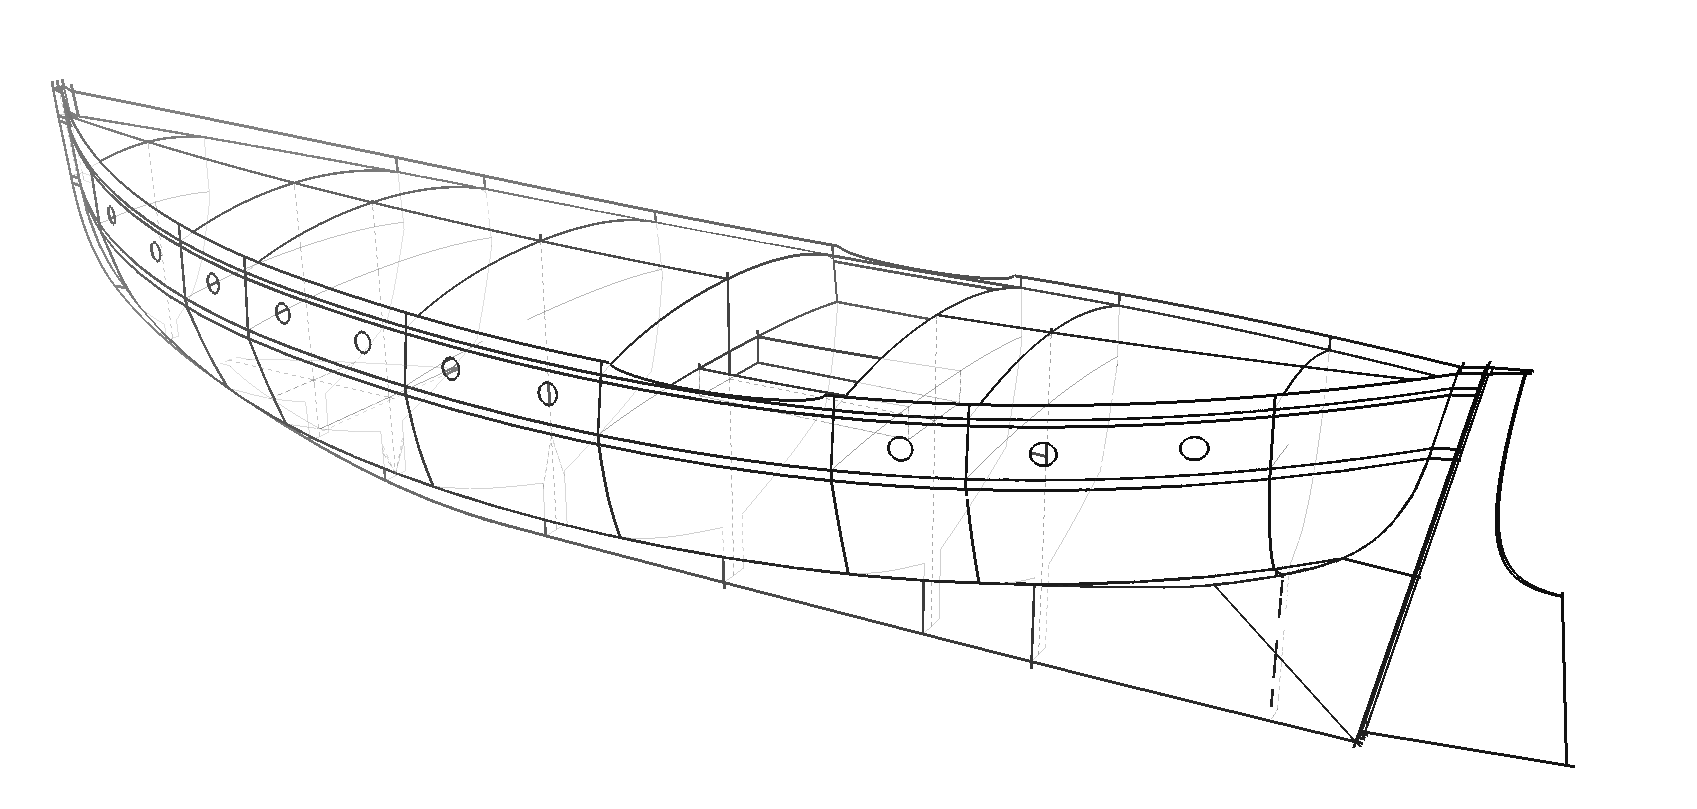 66' ASGARD - Pelagic Sailing Vessel - Kasten Marine Design, Inc.